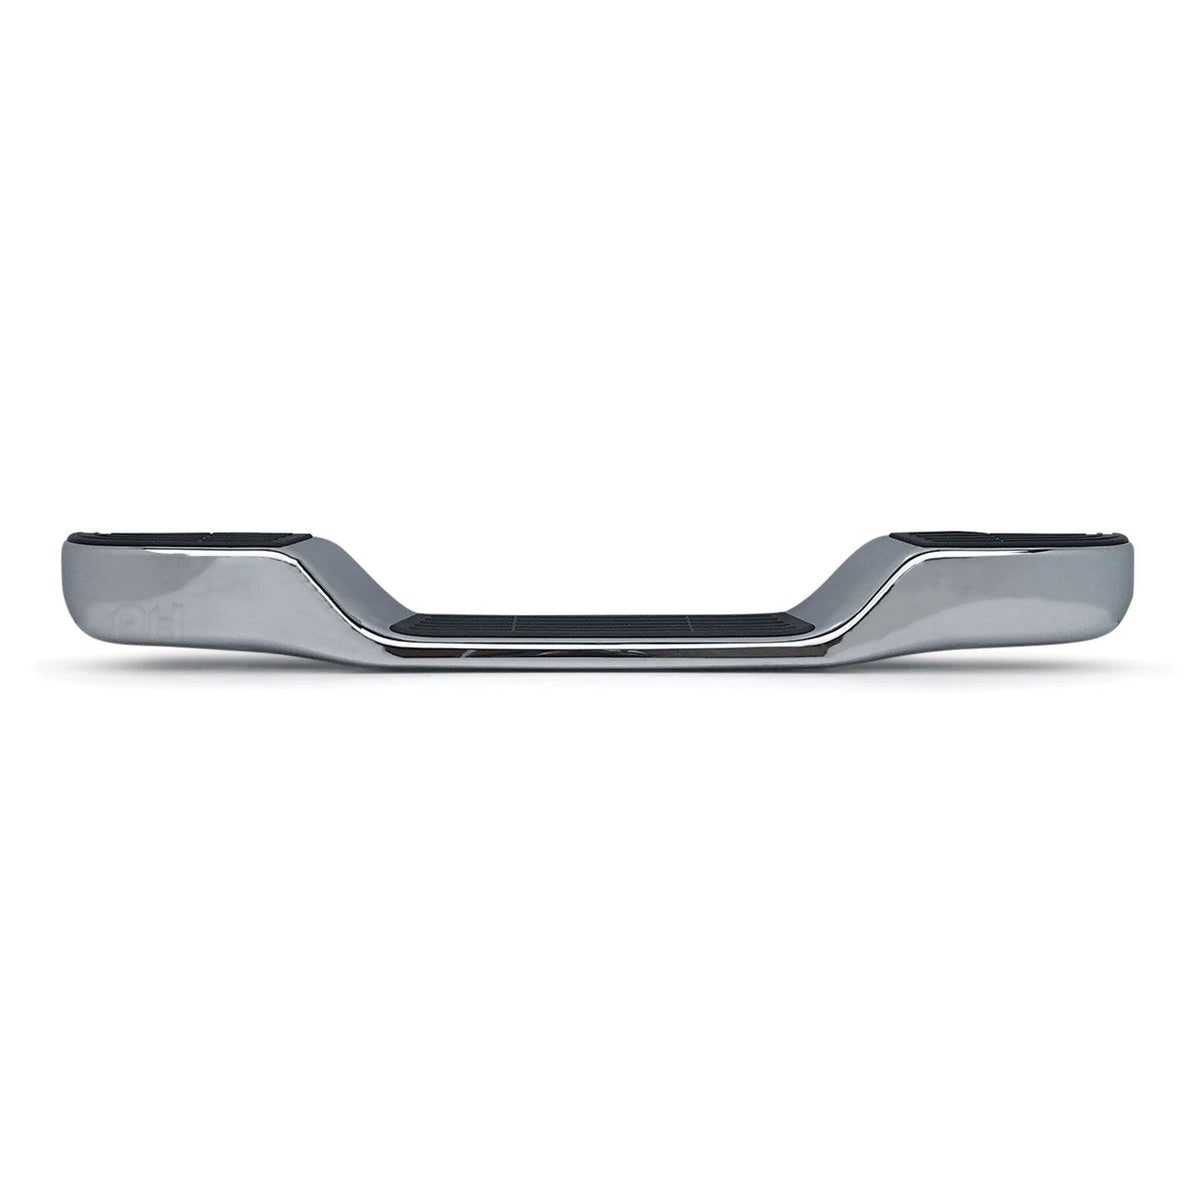 Bumper Bar REAR Chrome Step Fits Toyota Hilux SR5 05-14 - 4X4OC™